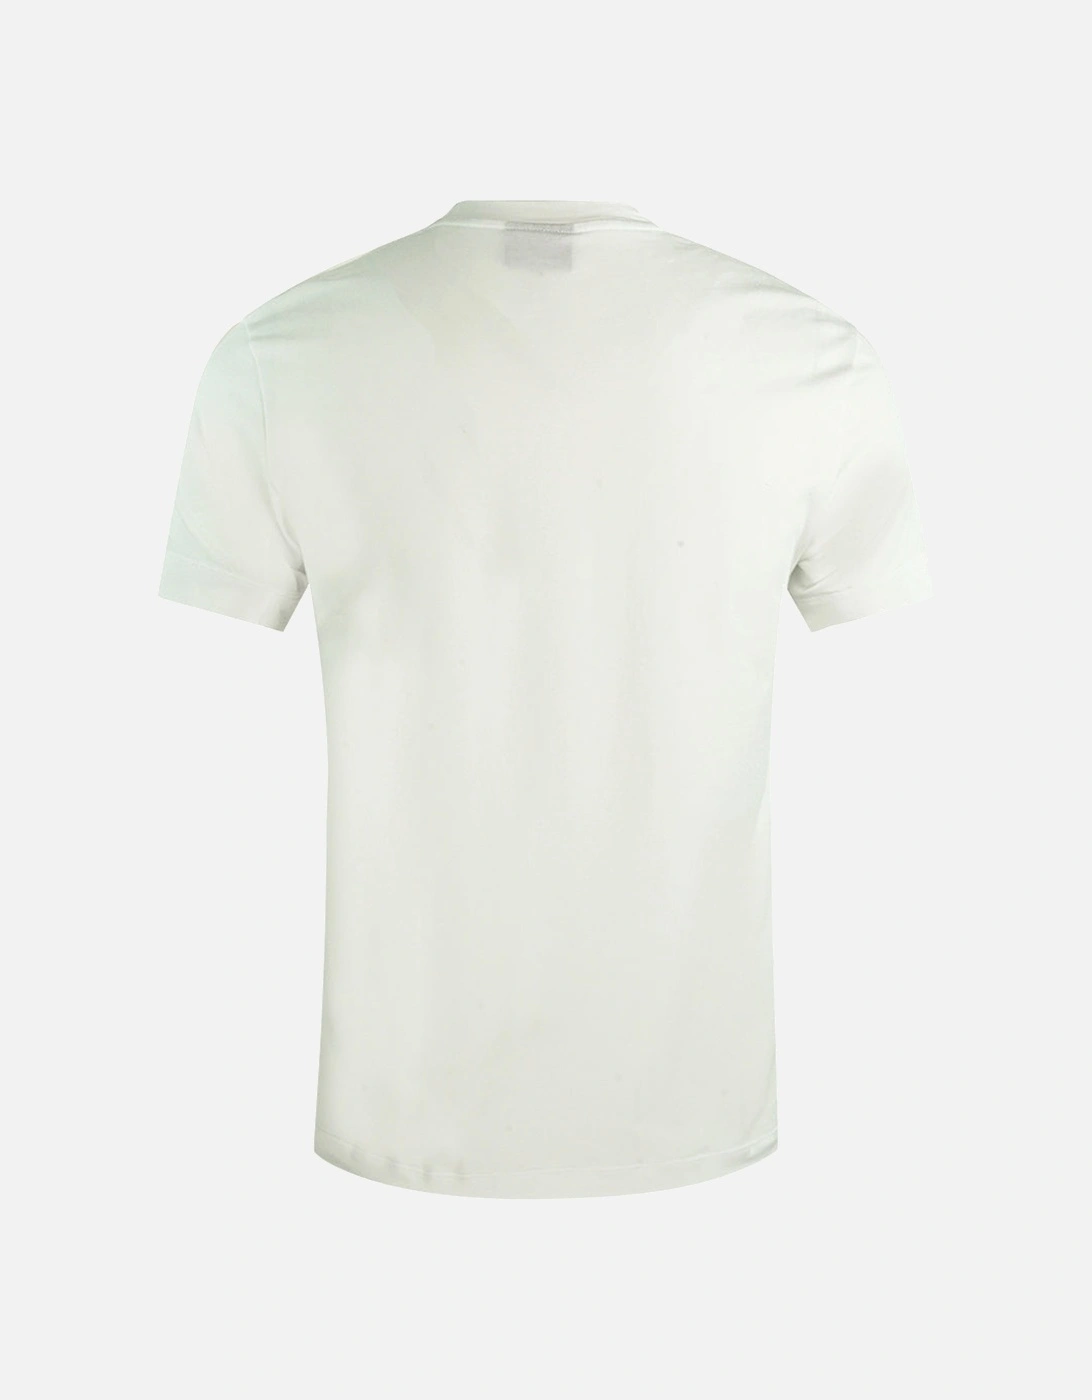 EA Italian Flag Logo White T-Shirt